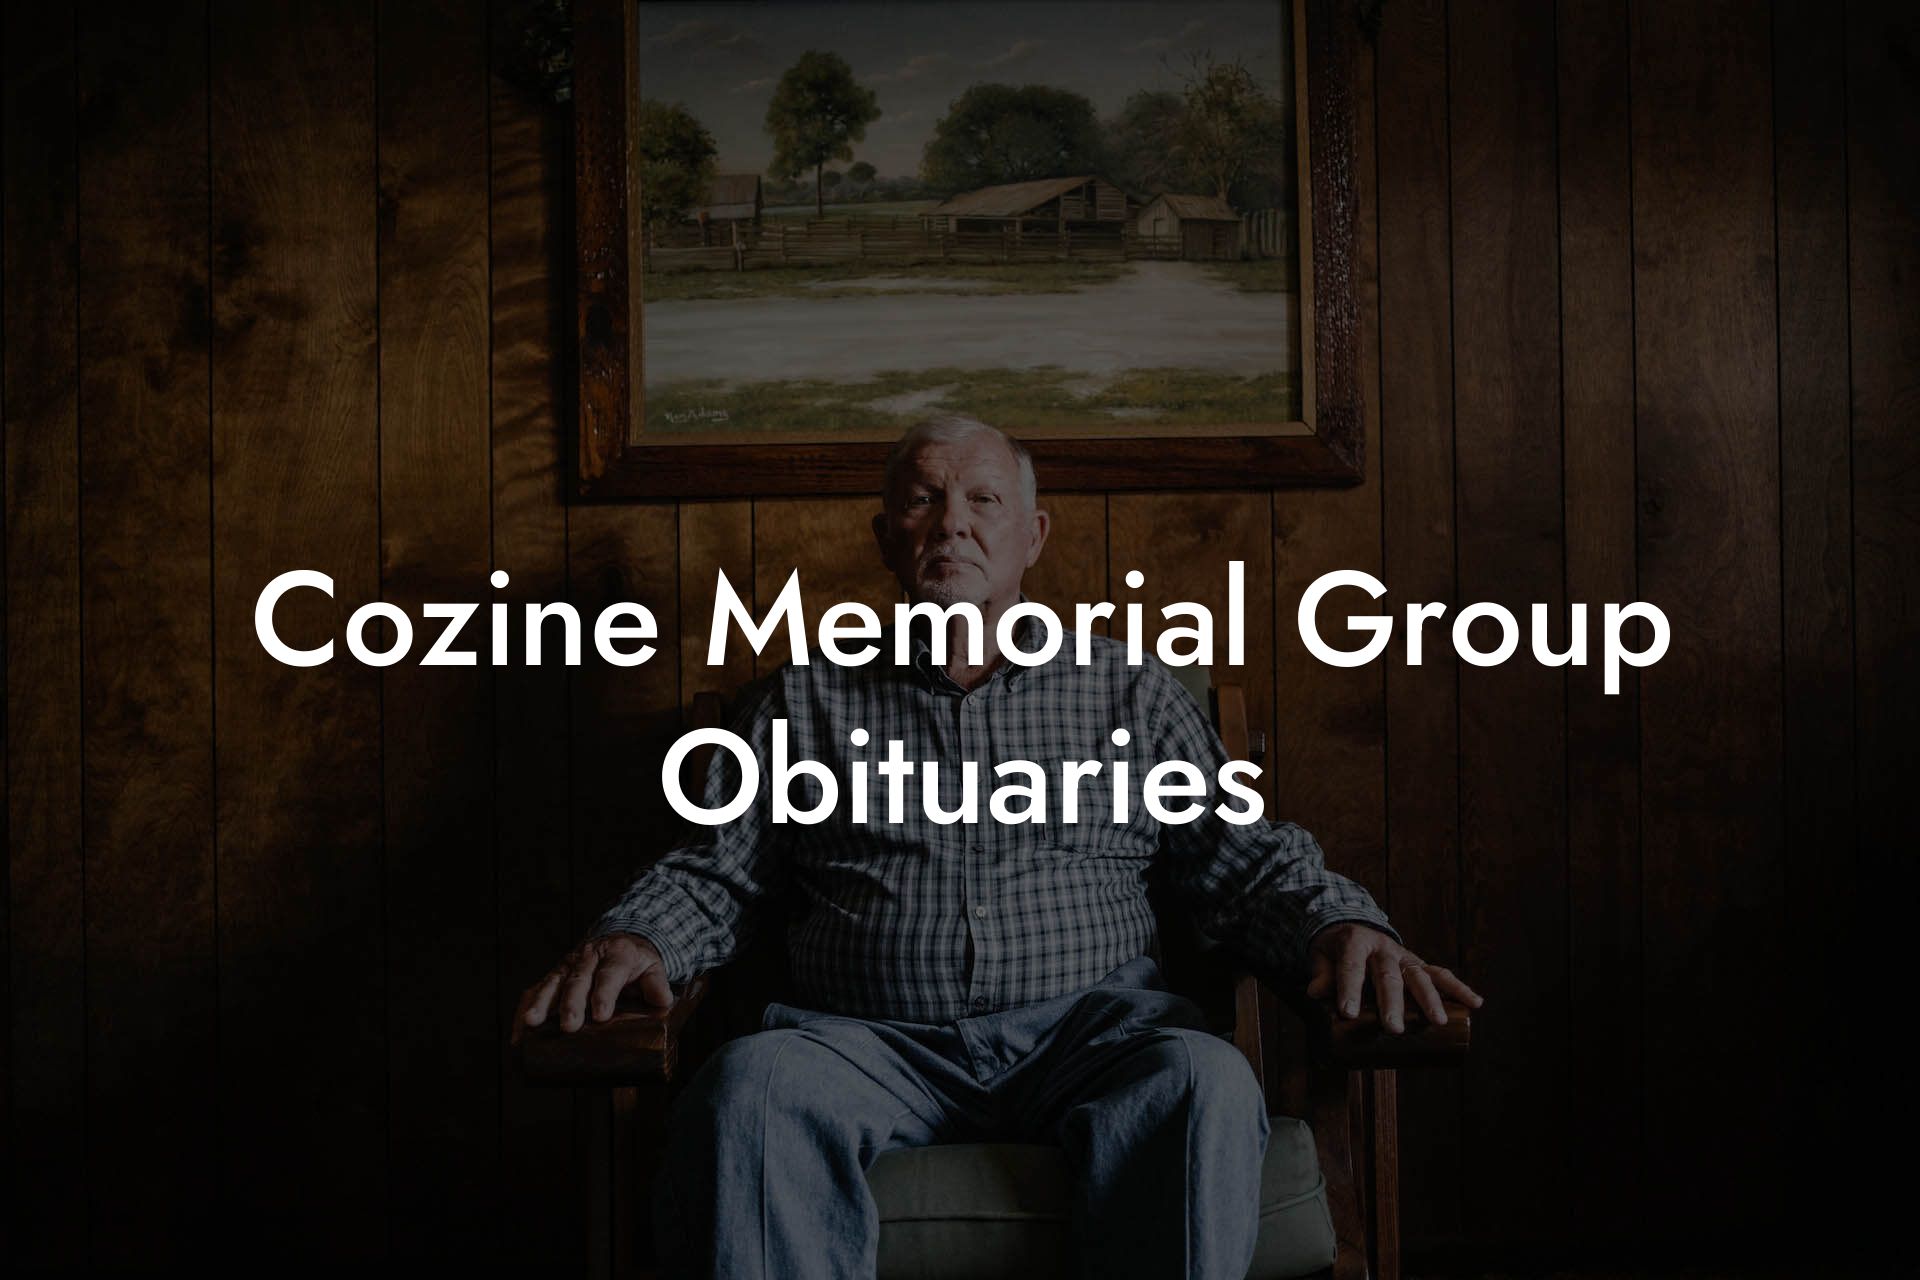 Cozine Memorial Group Obituaries